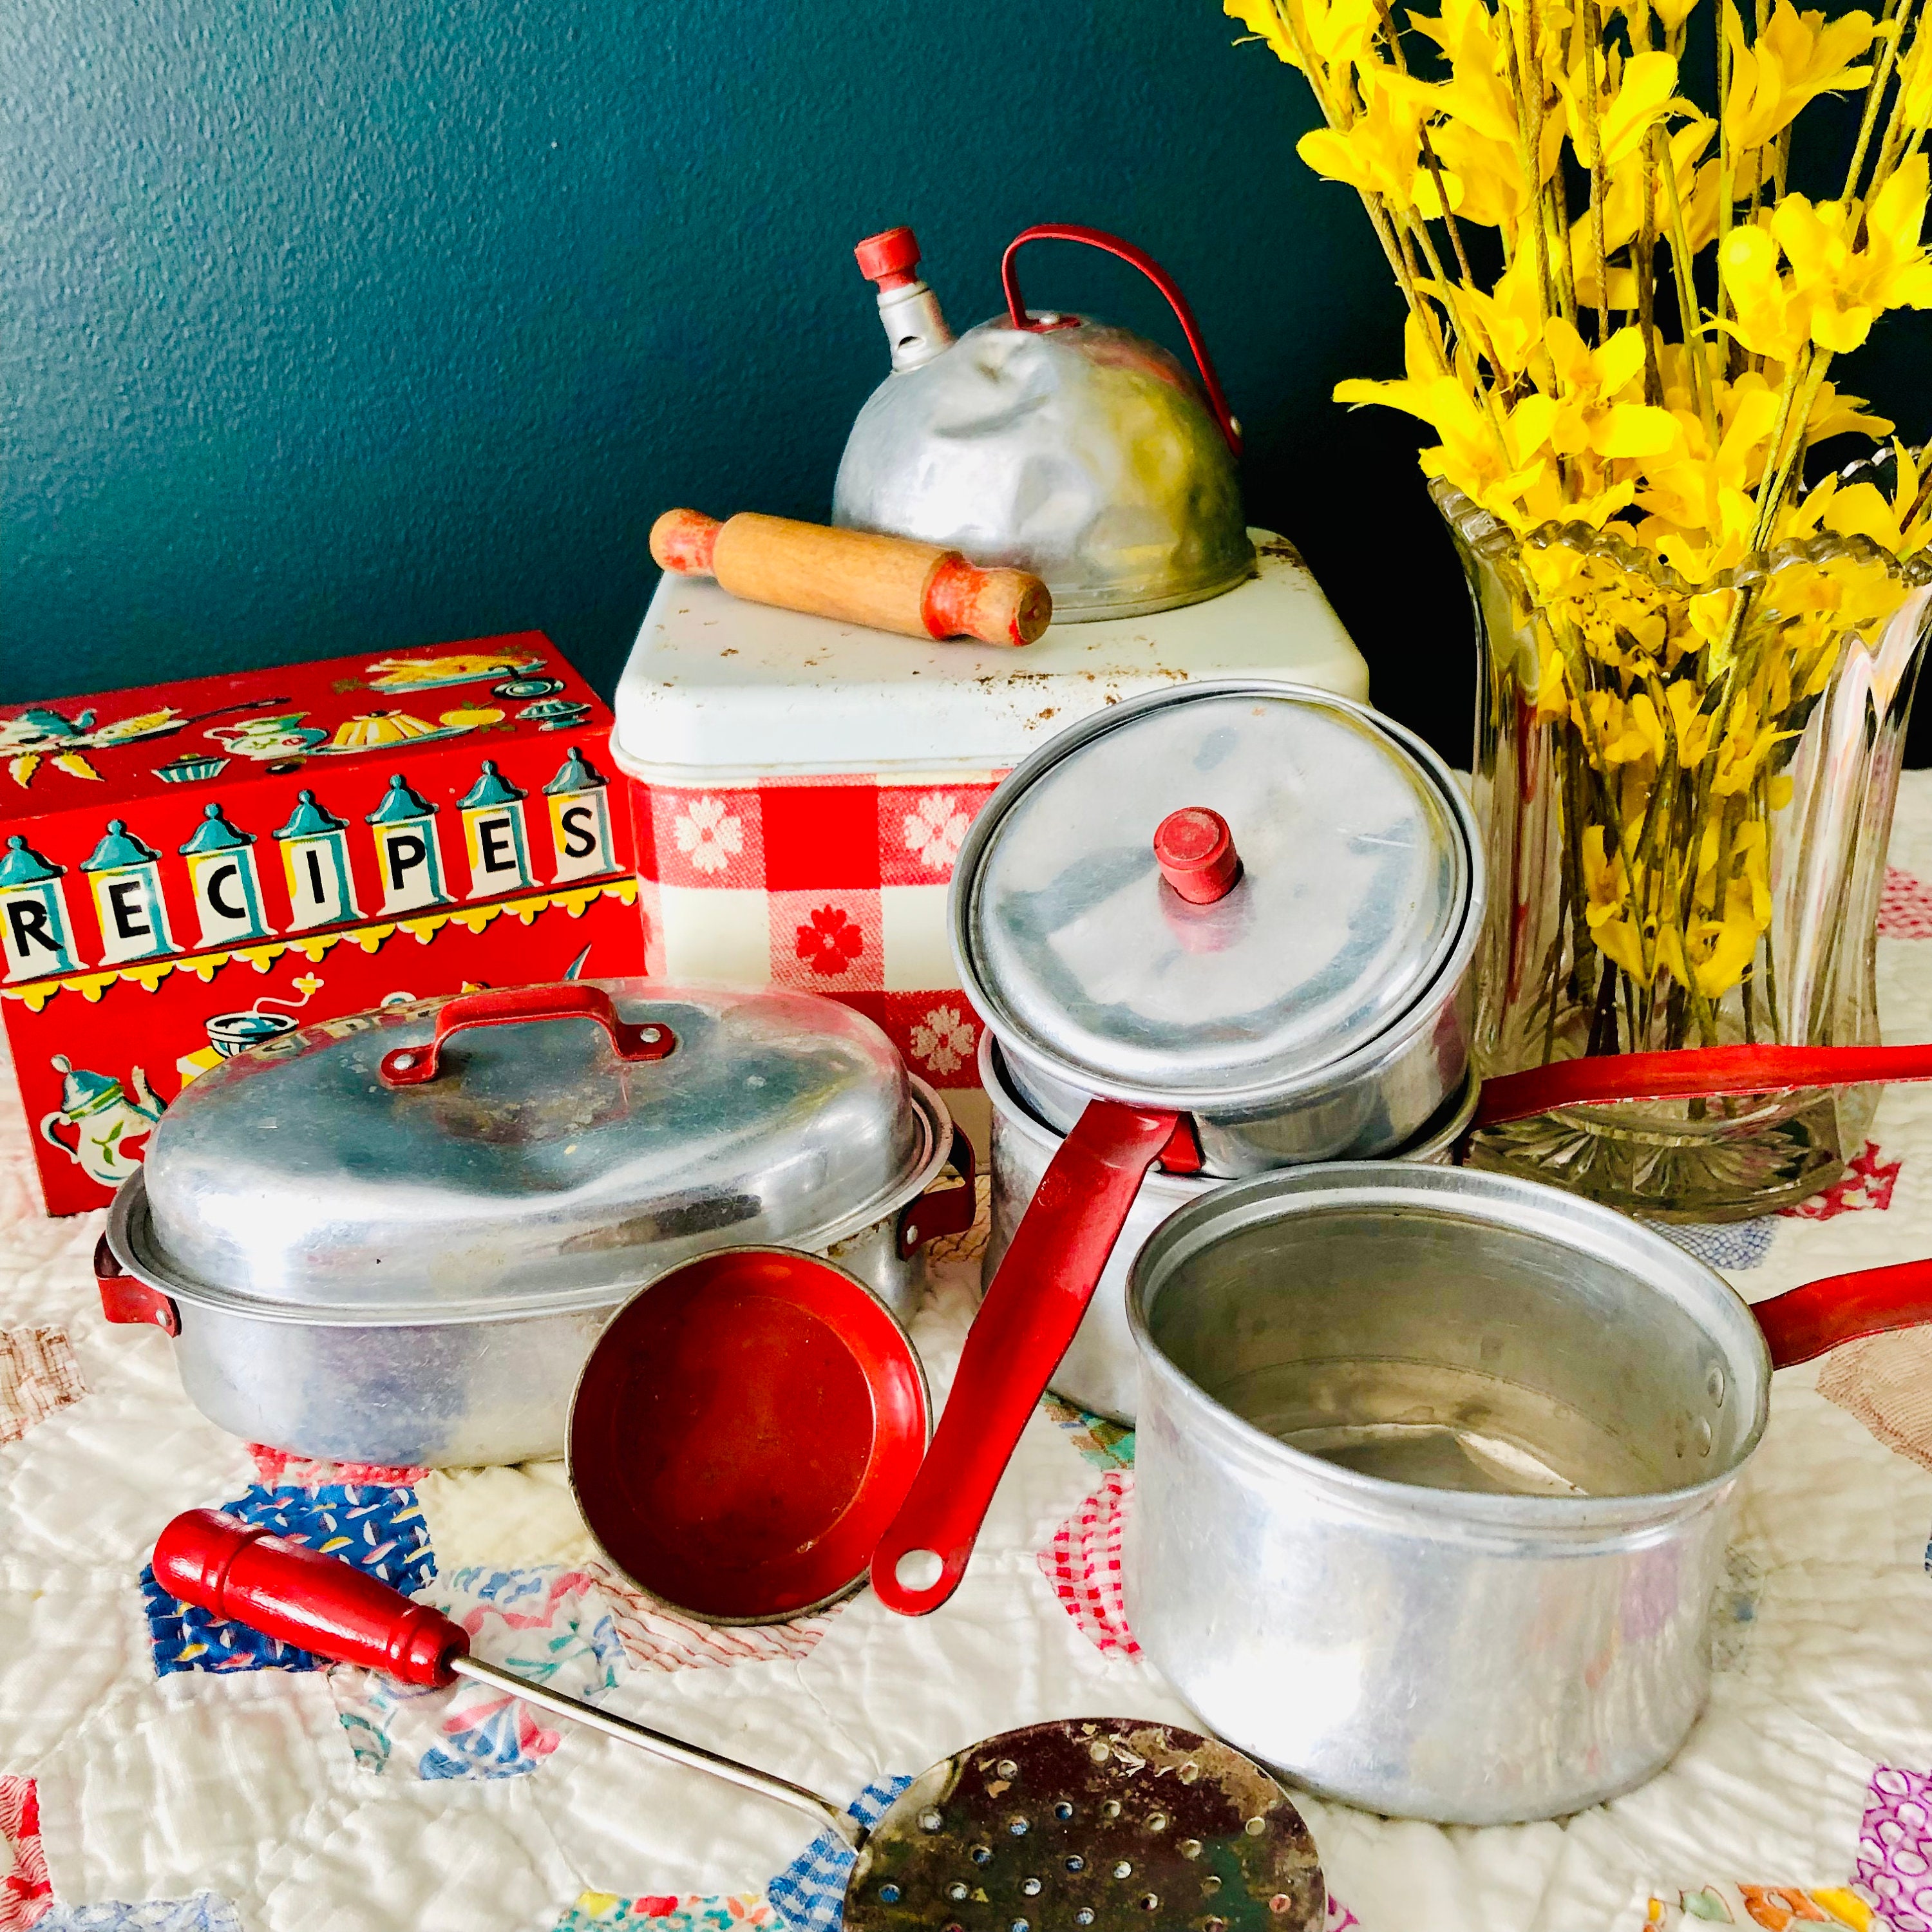 Hot stuff! Vintage 1950s saucepans & kitchenware in popular retro styles -  Click Americana